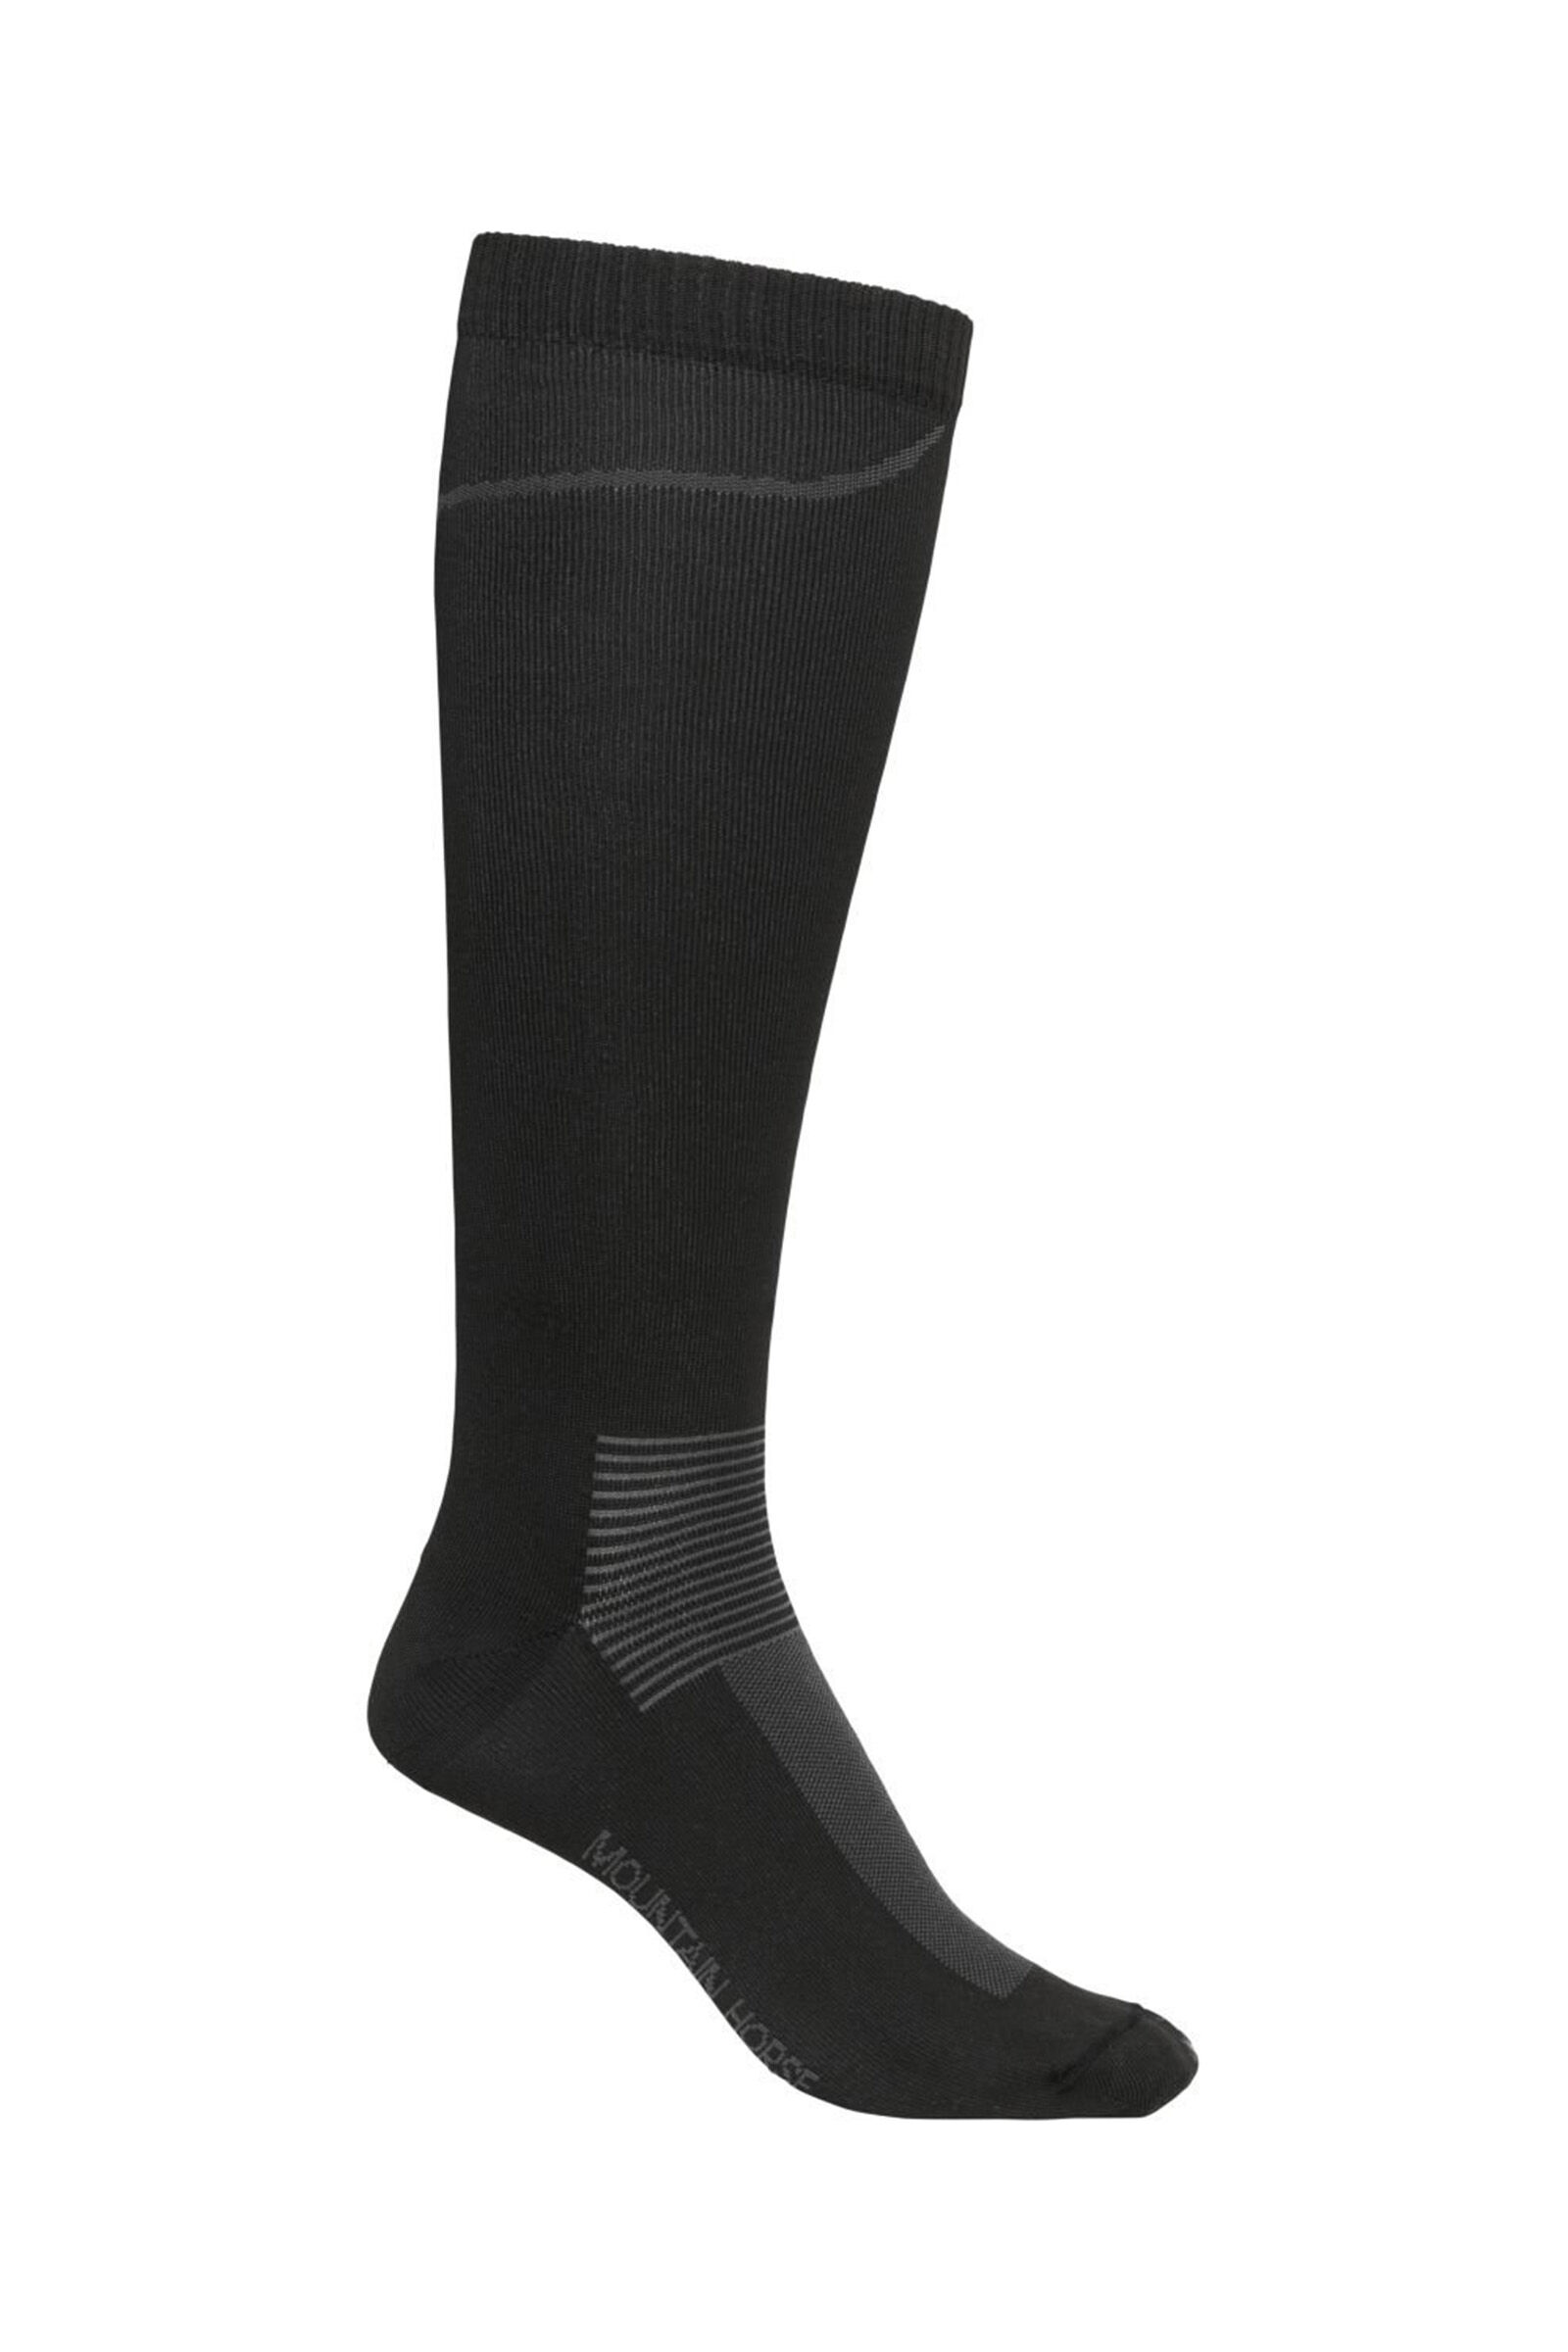 Mountain Horse Sovereign Socken Black 35-39 unisex